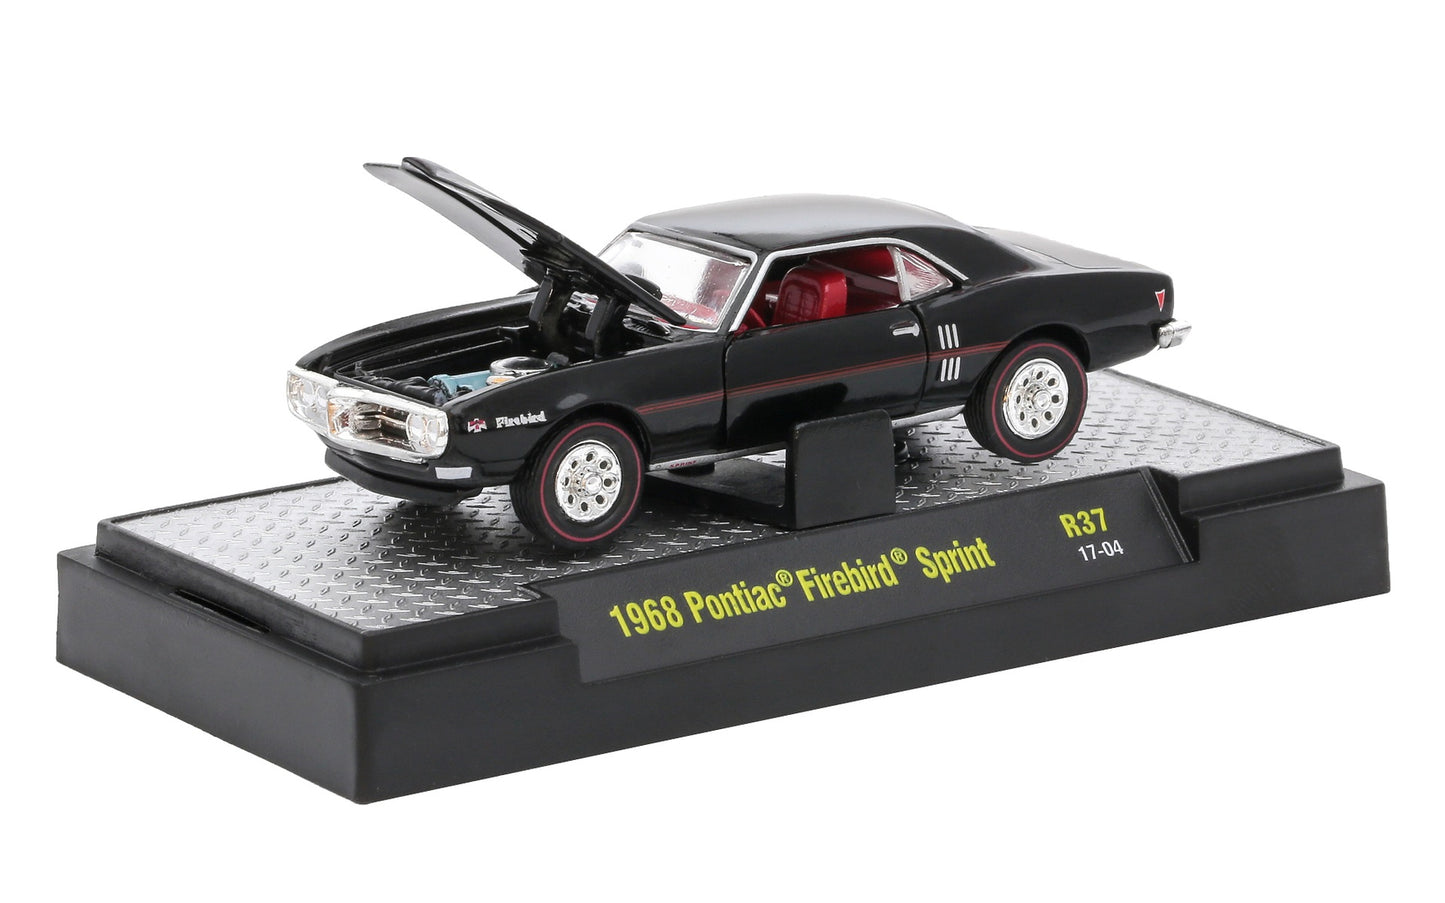 Release 37 - 1968 Pontiac Firebird Sprint Die Cast Model